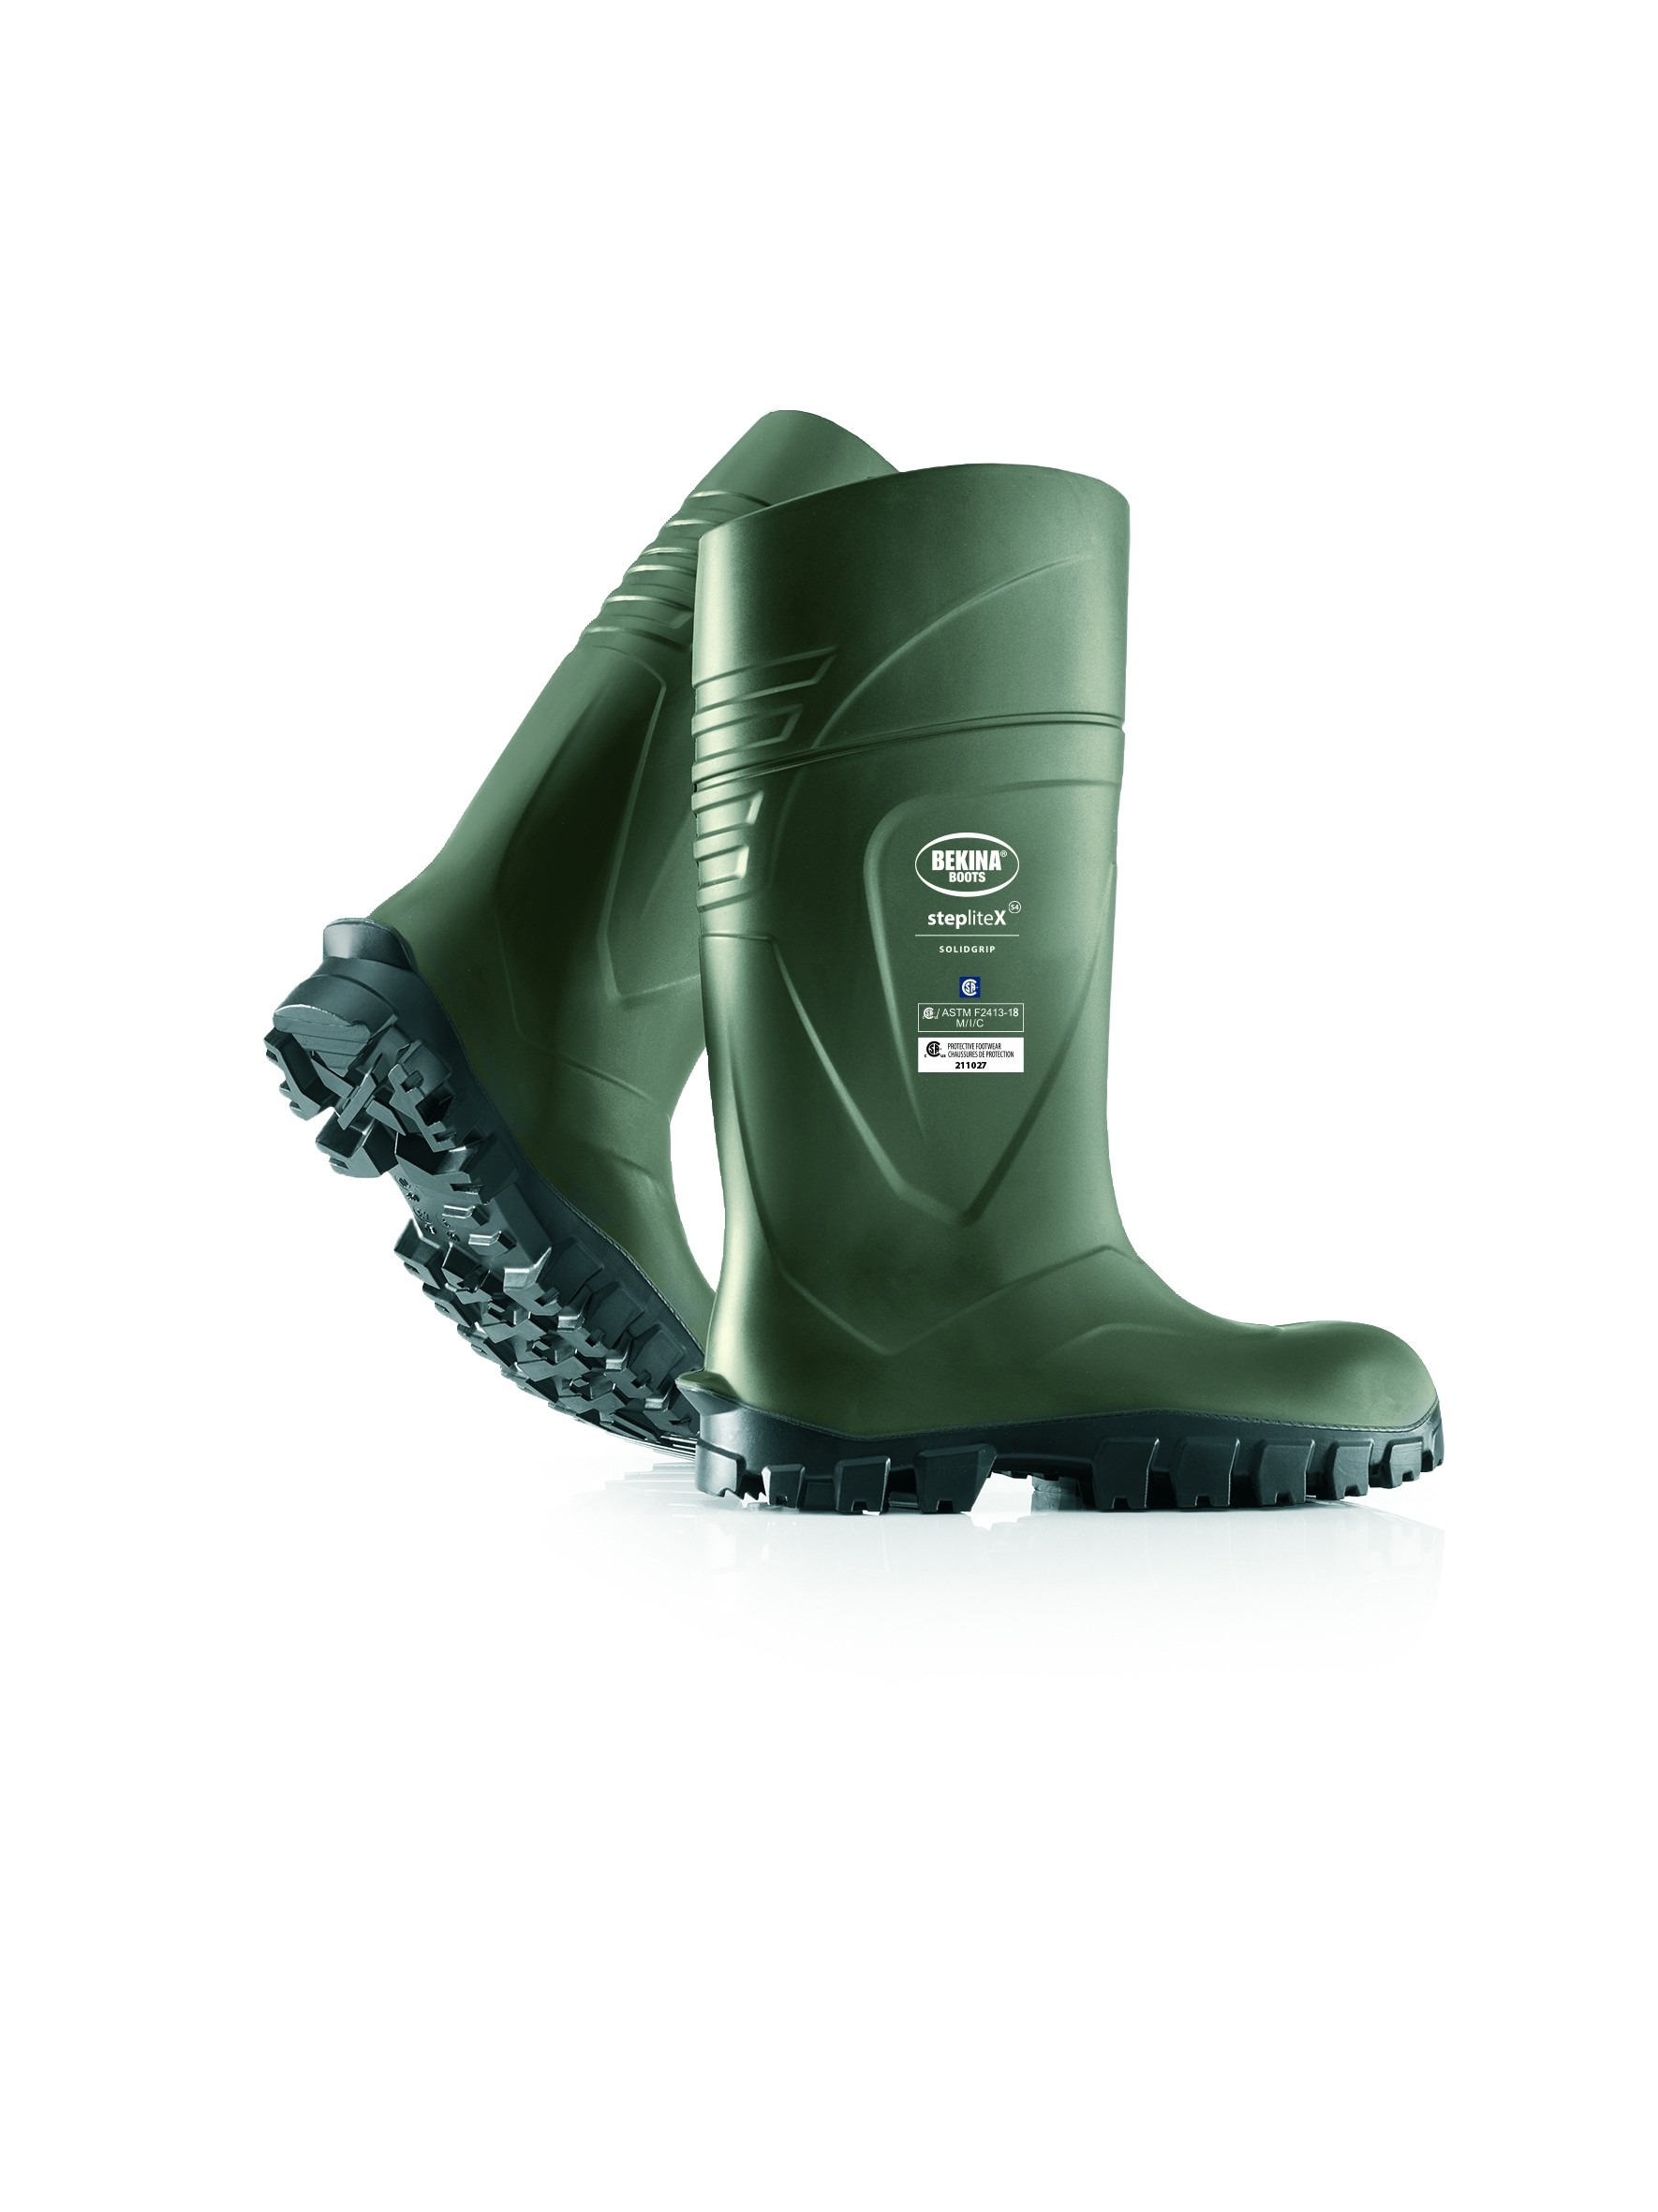 BEKINA Steplite X Waterproof Insulated Industrial Boots | UltraSource ...